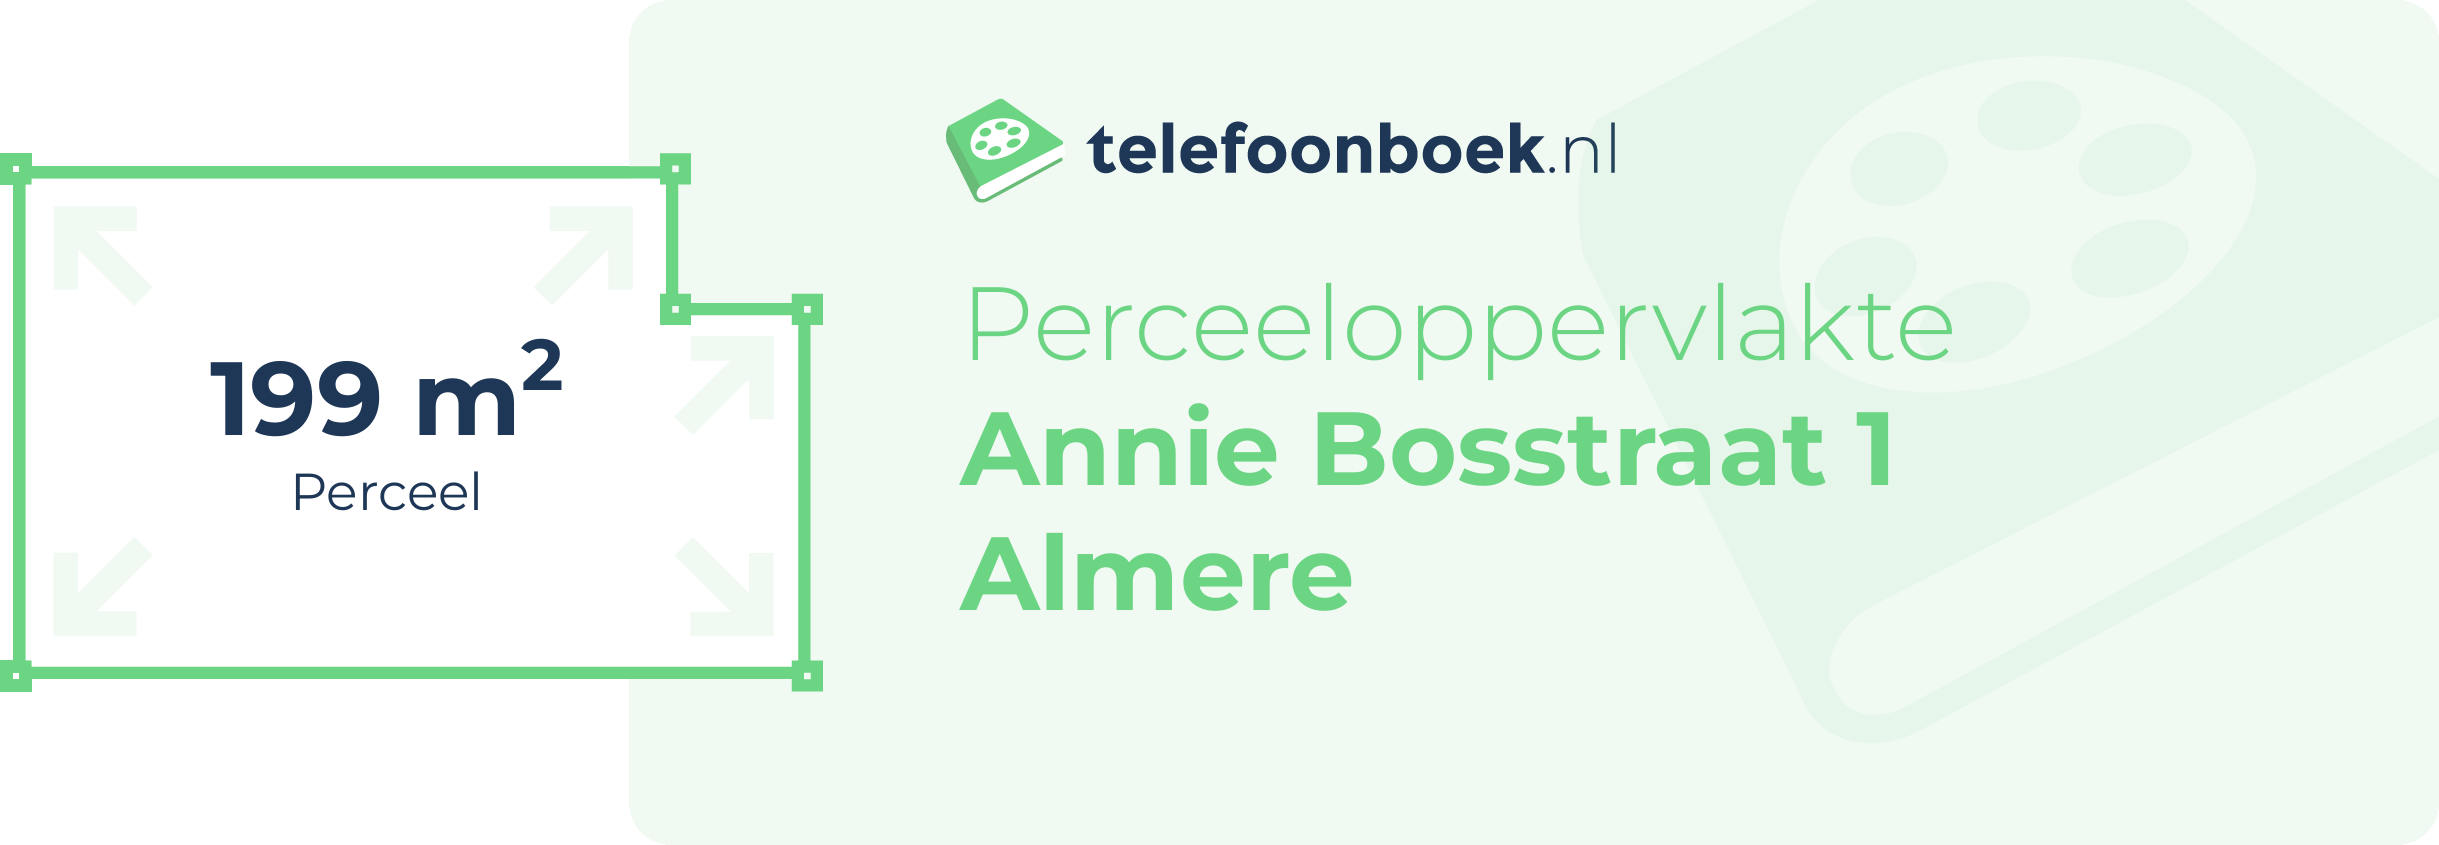 Perceeloppervlakte Annie Bosstraat 1 Almere